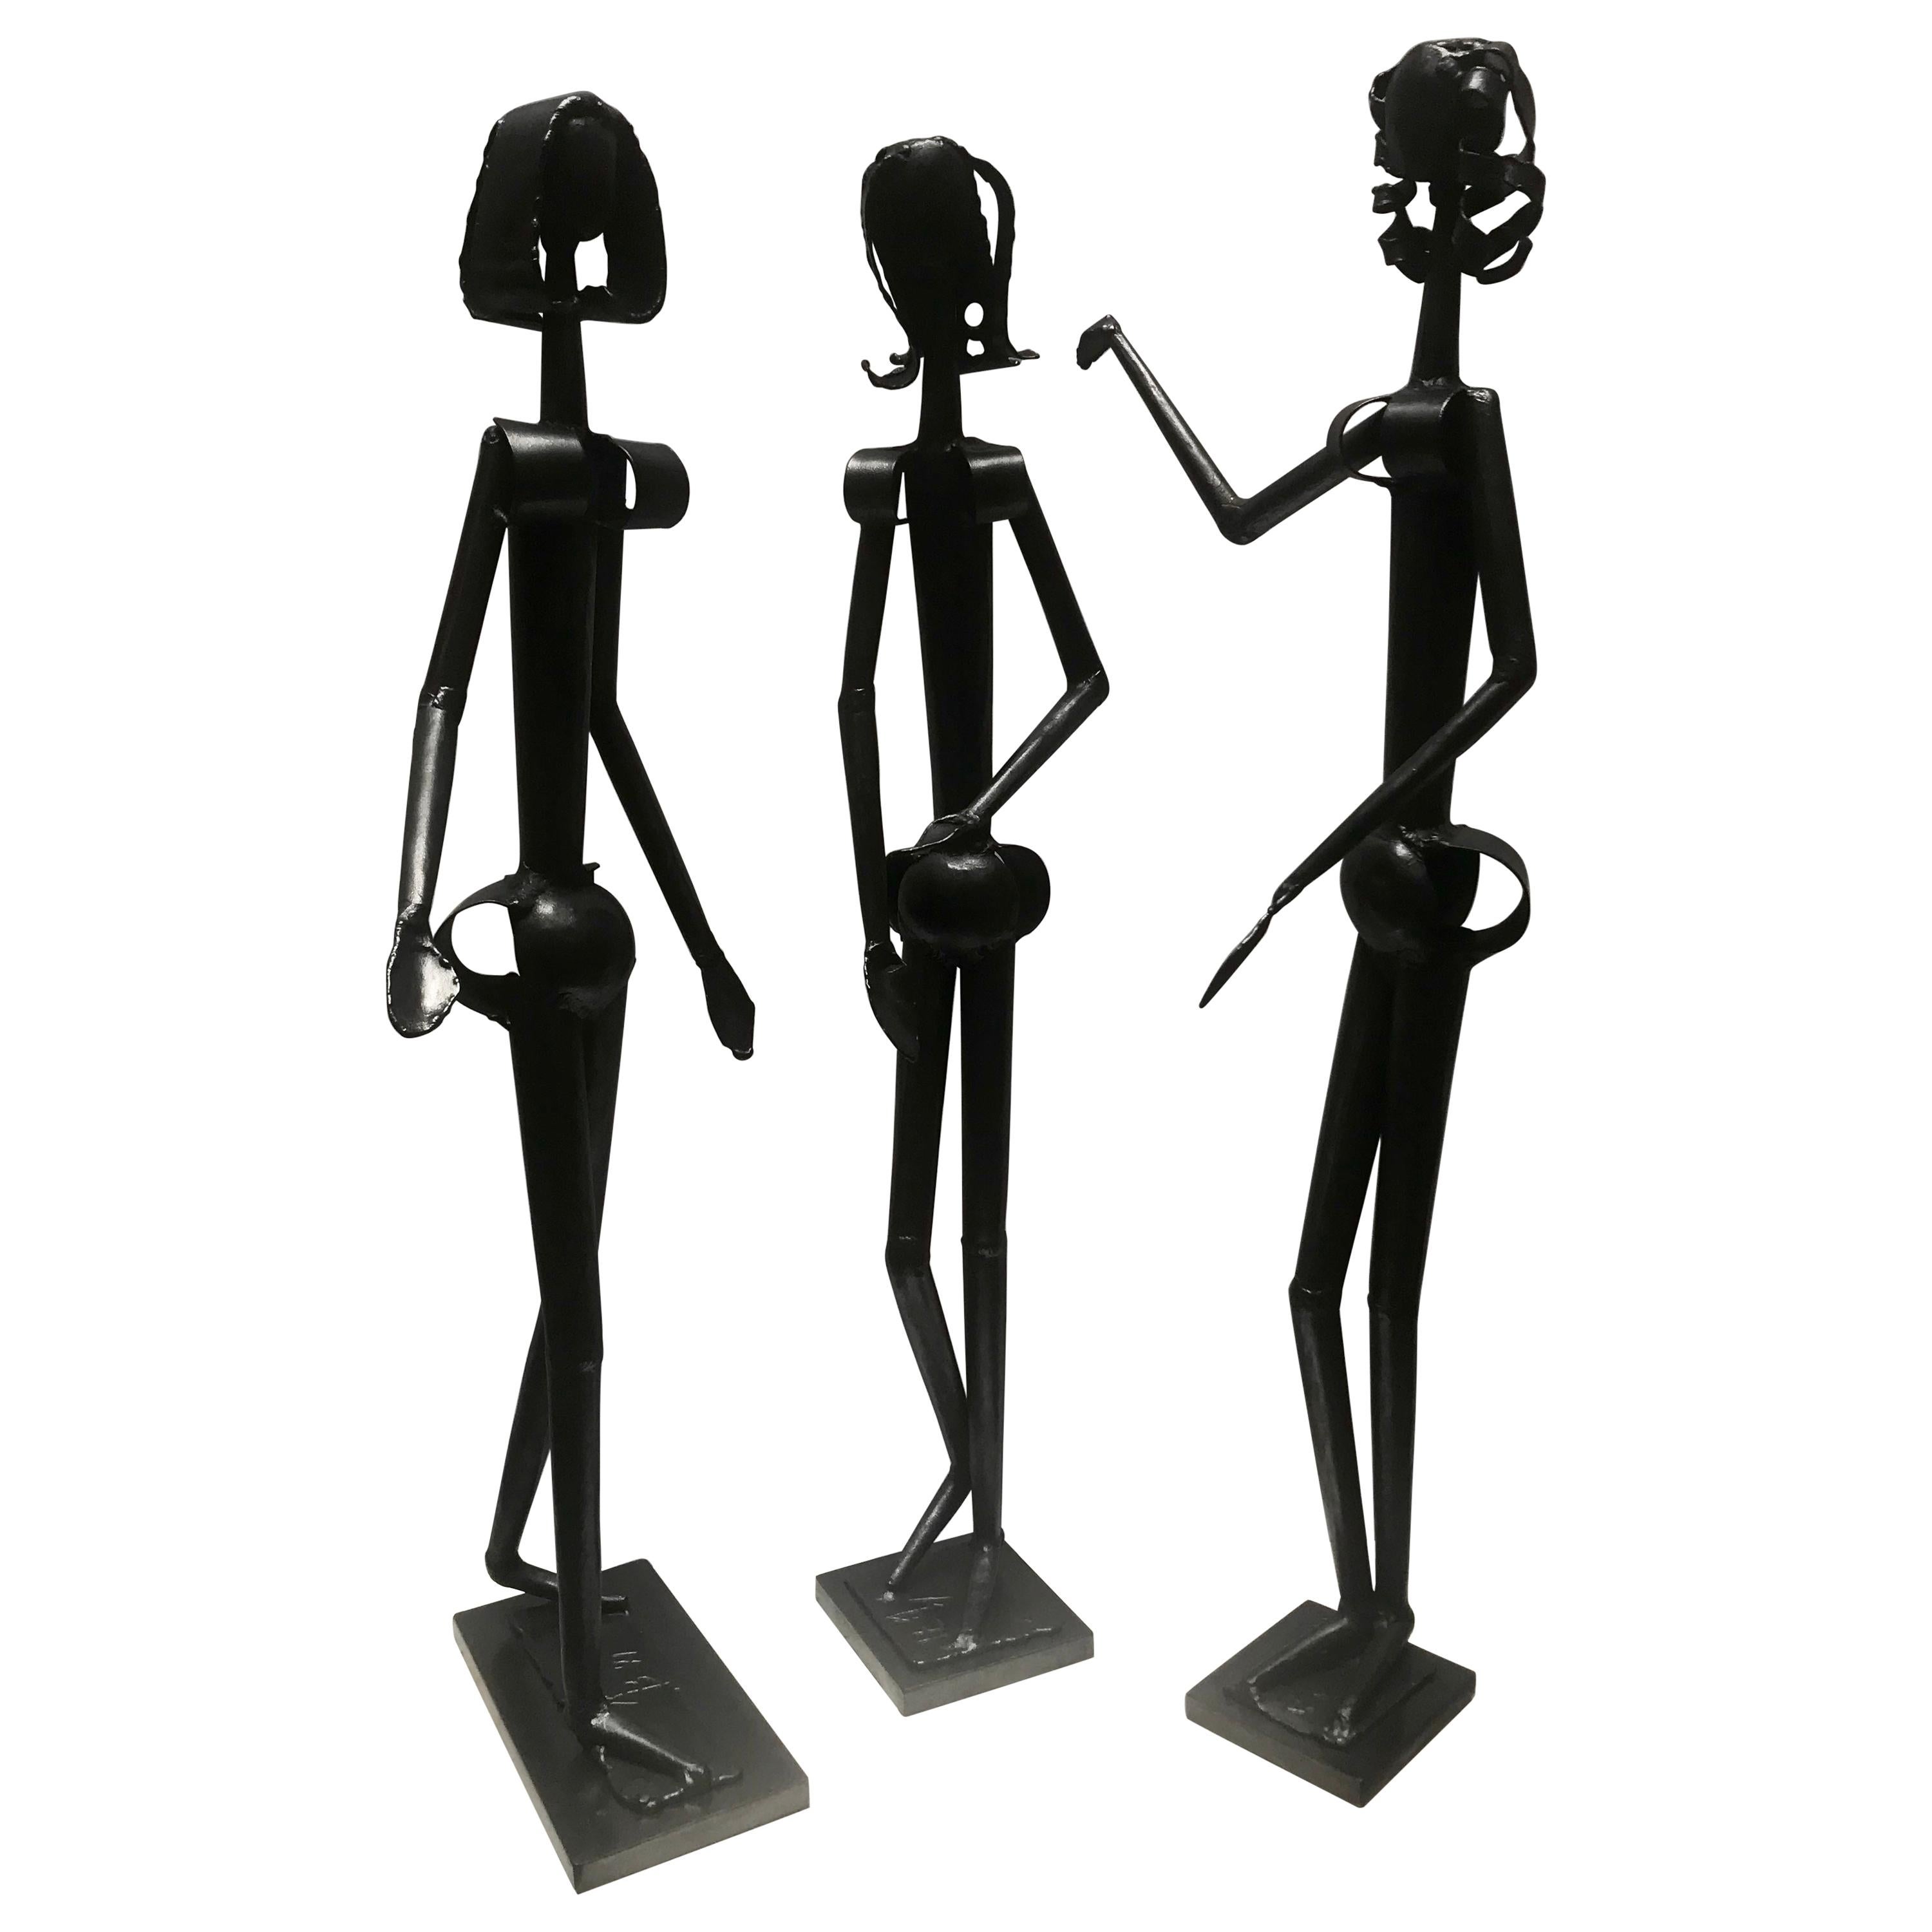 Sculptures of Three "Parisian" Women For Sale